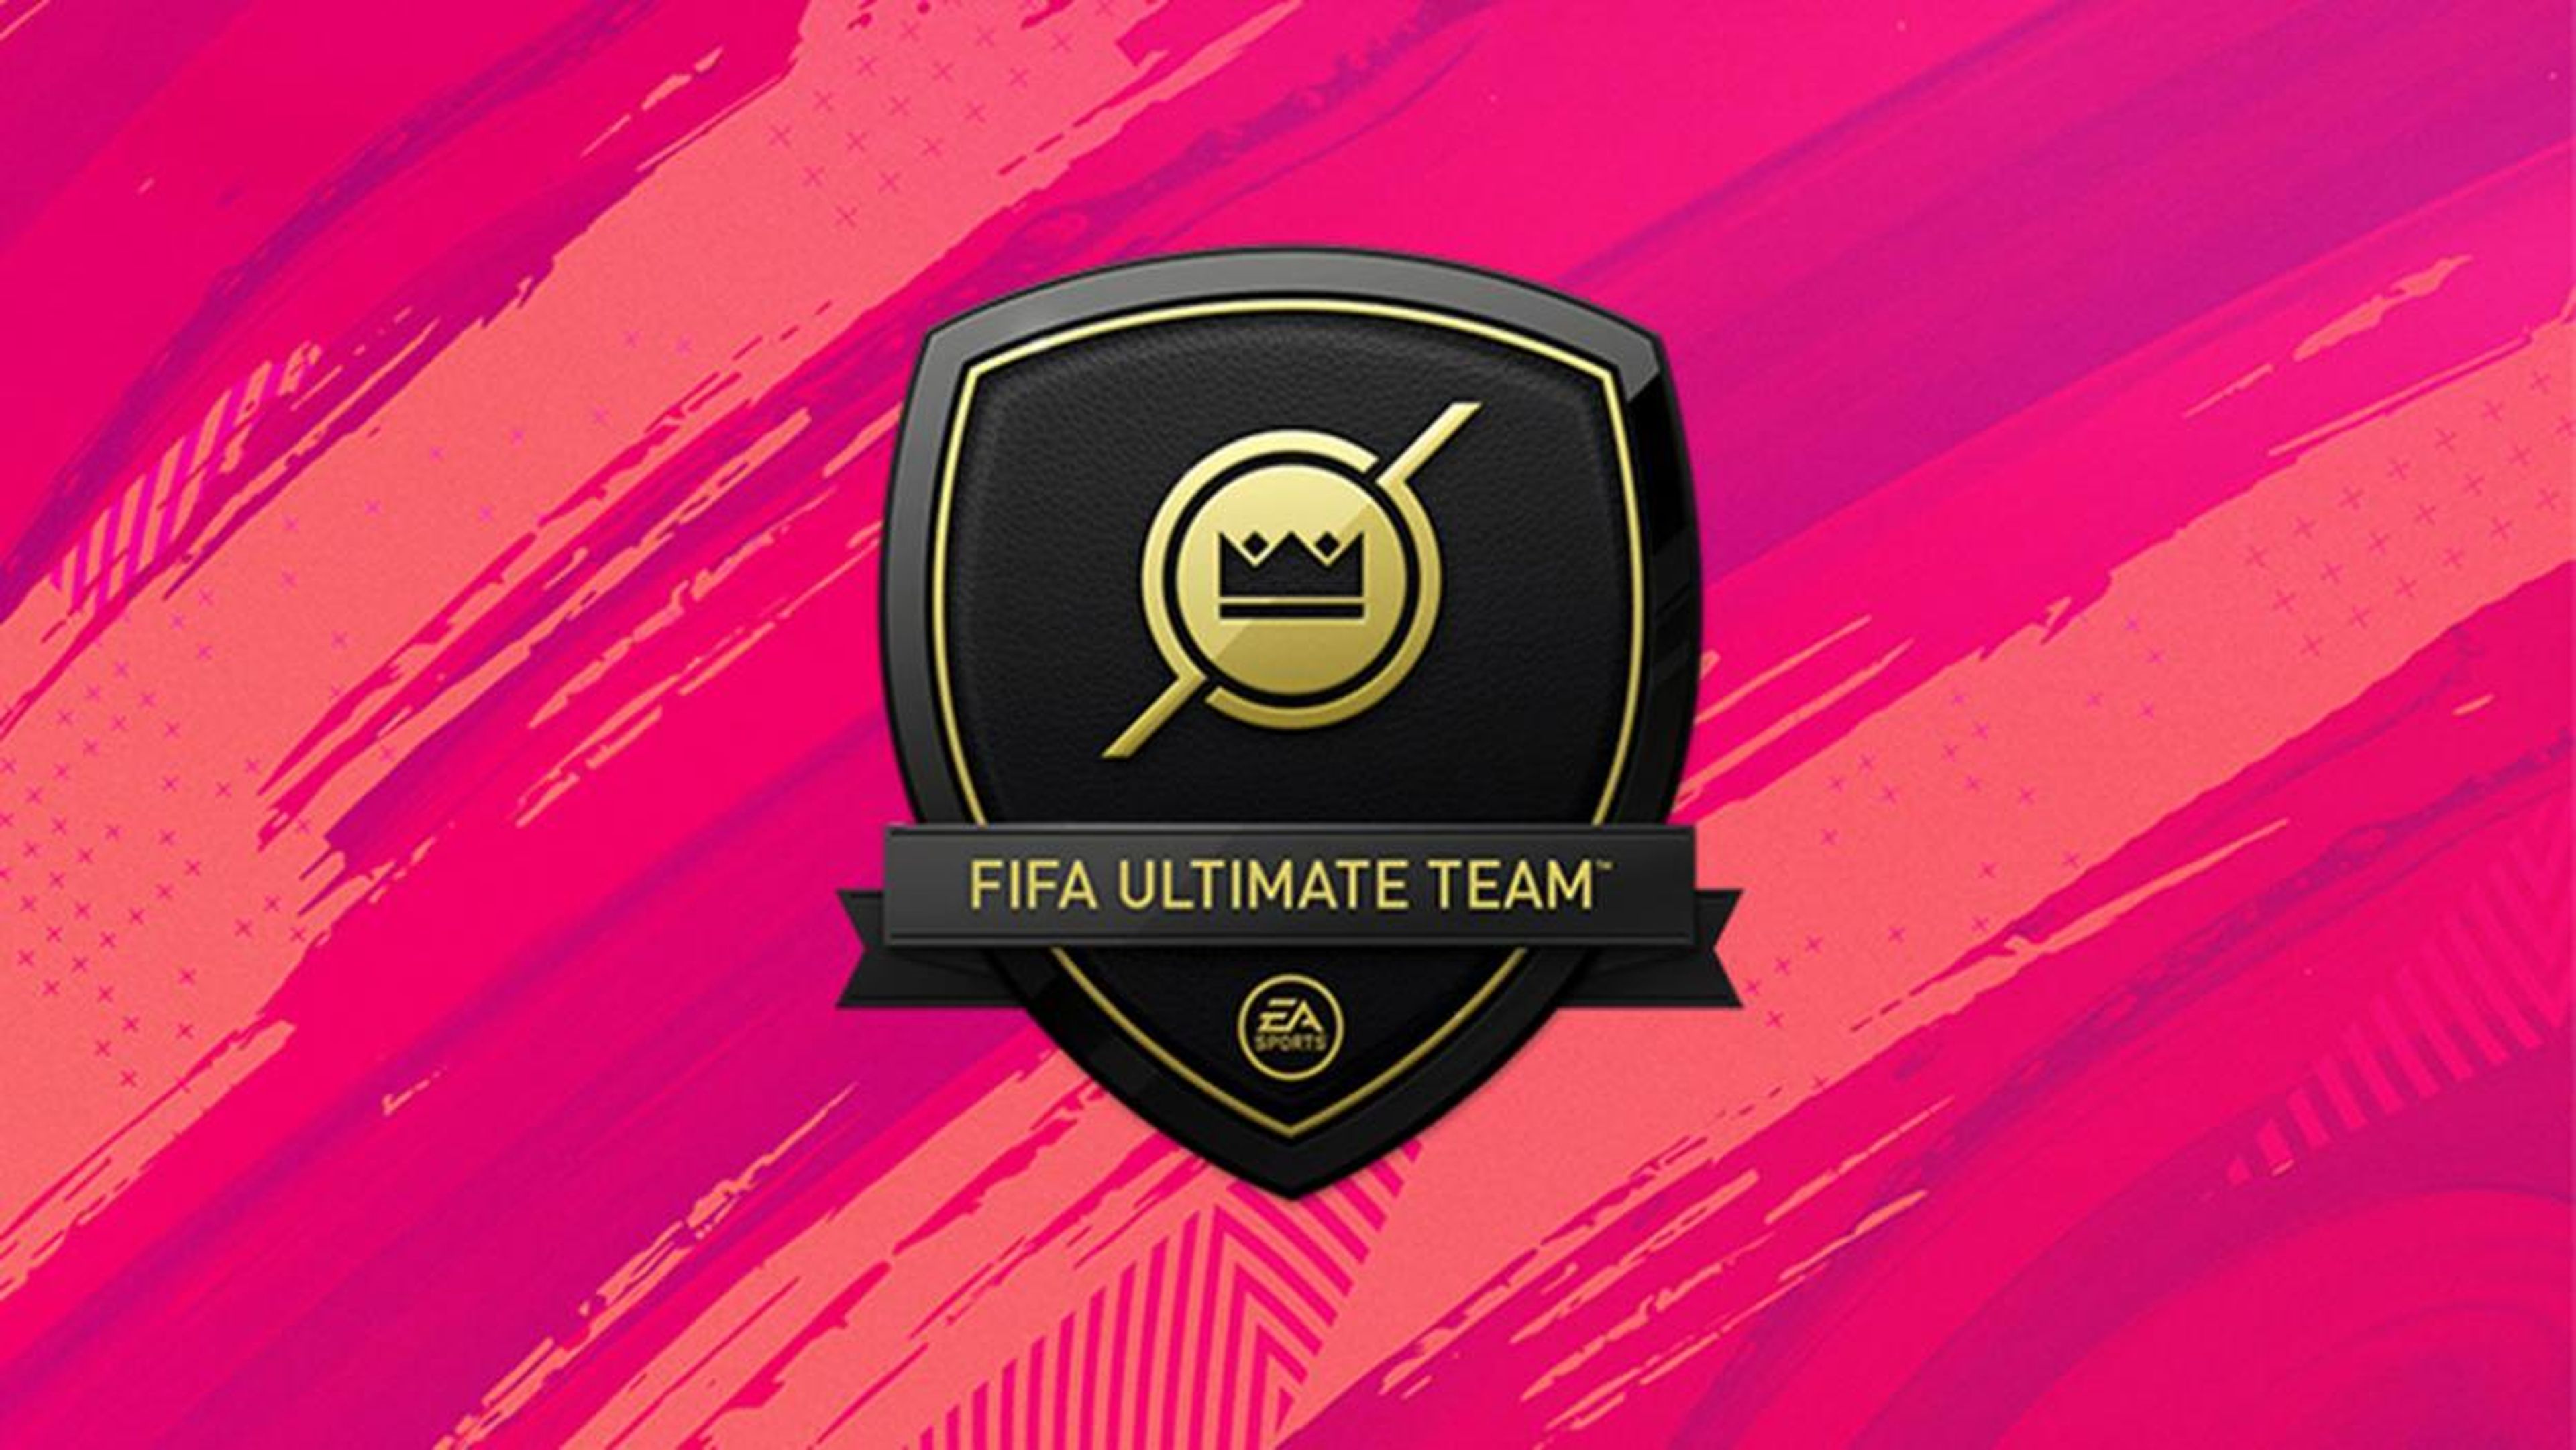 FIFA 19 Ultimate Team